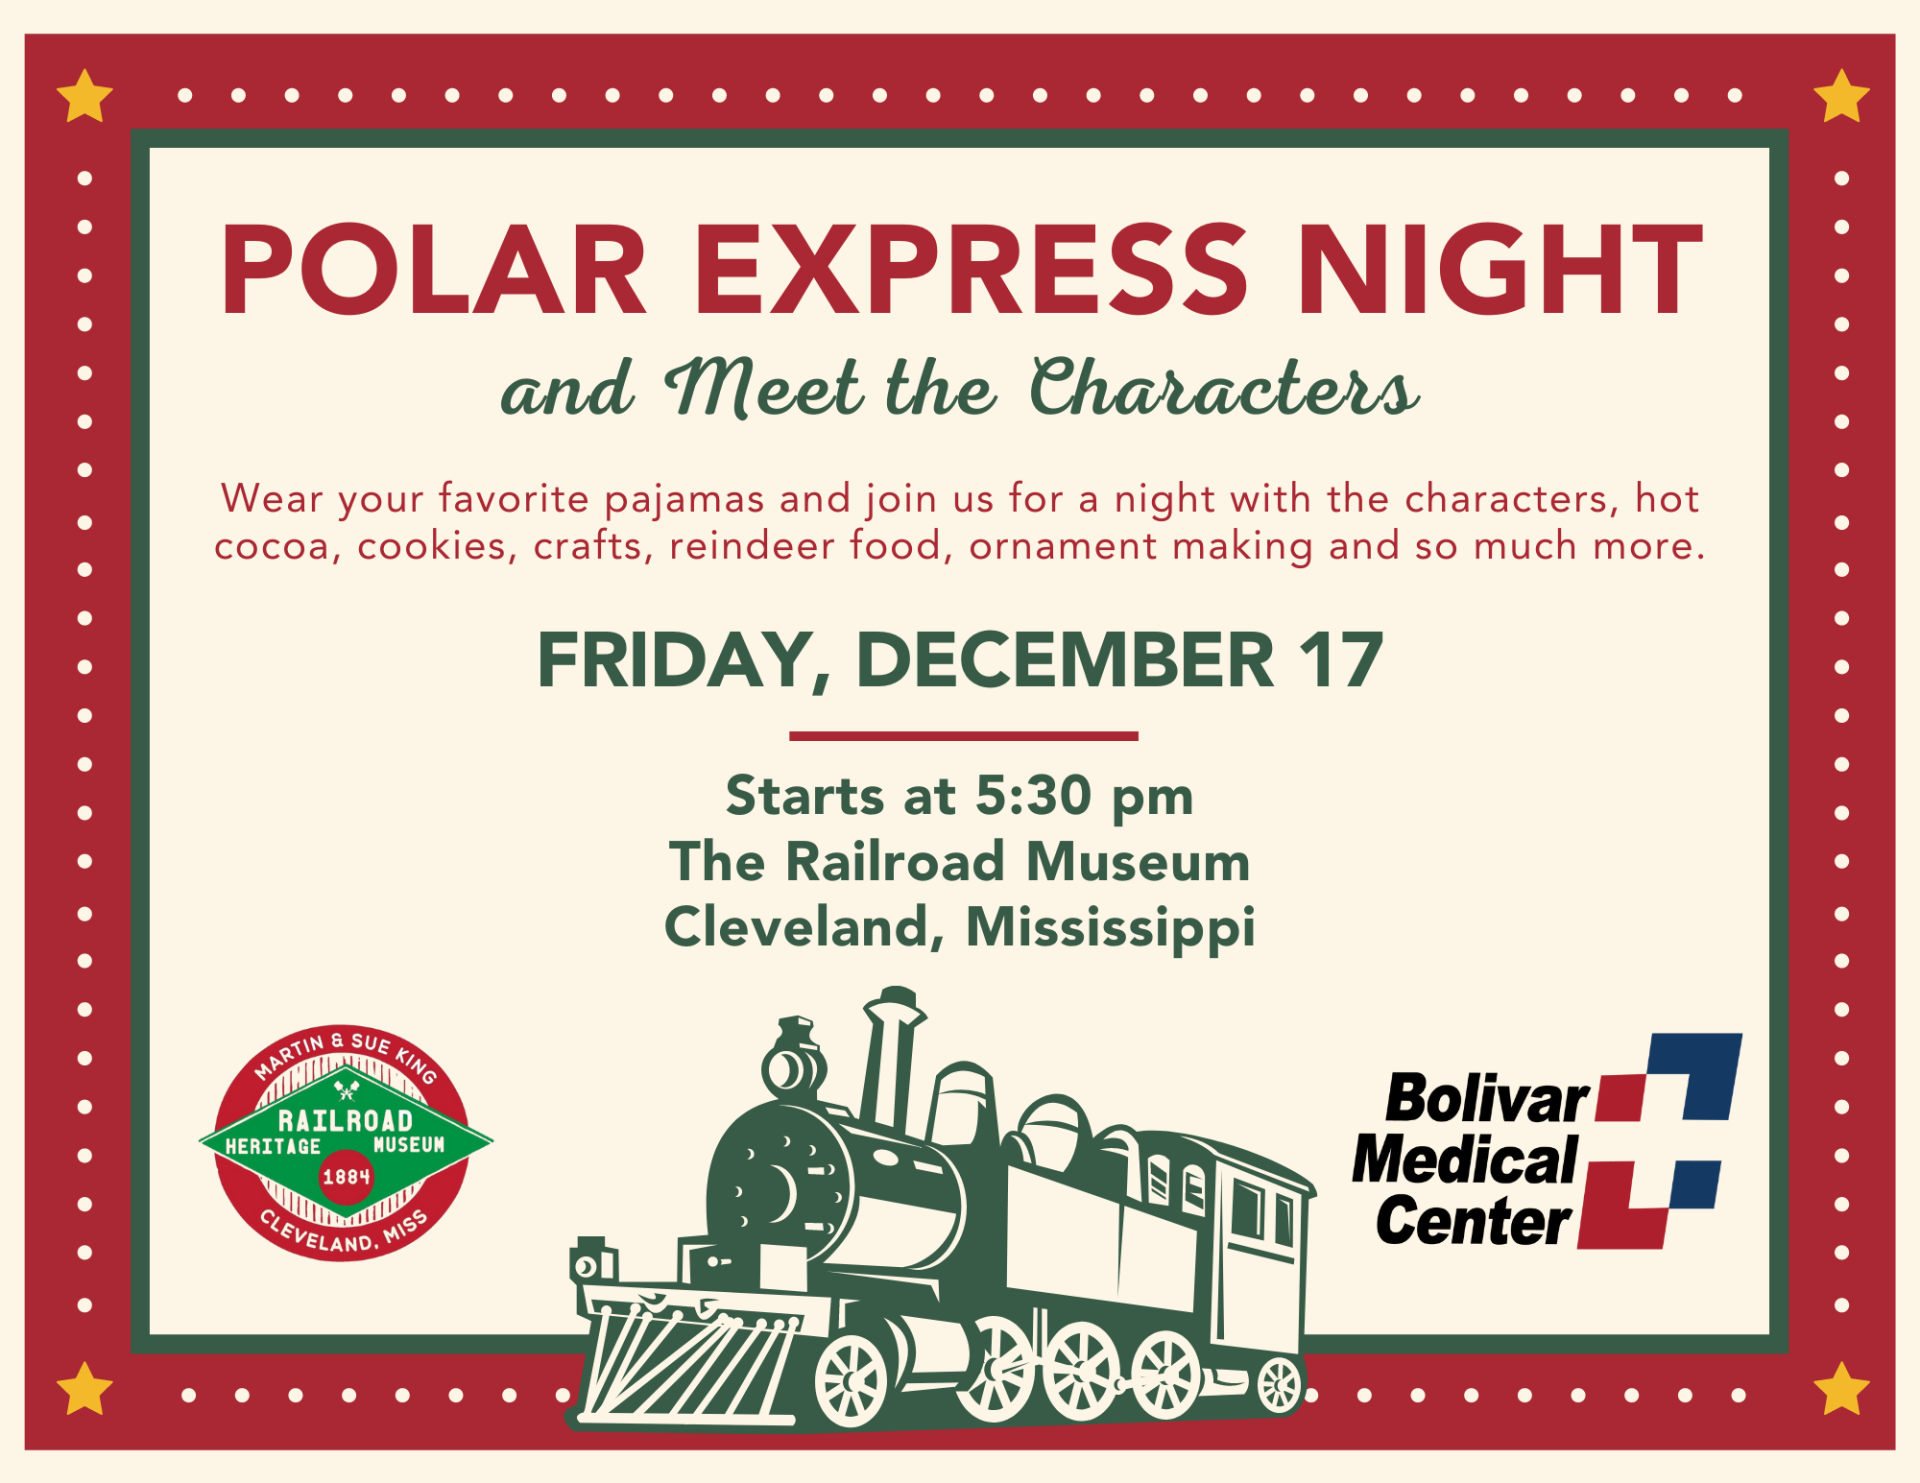 Polar express night at the train museum